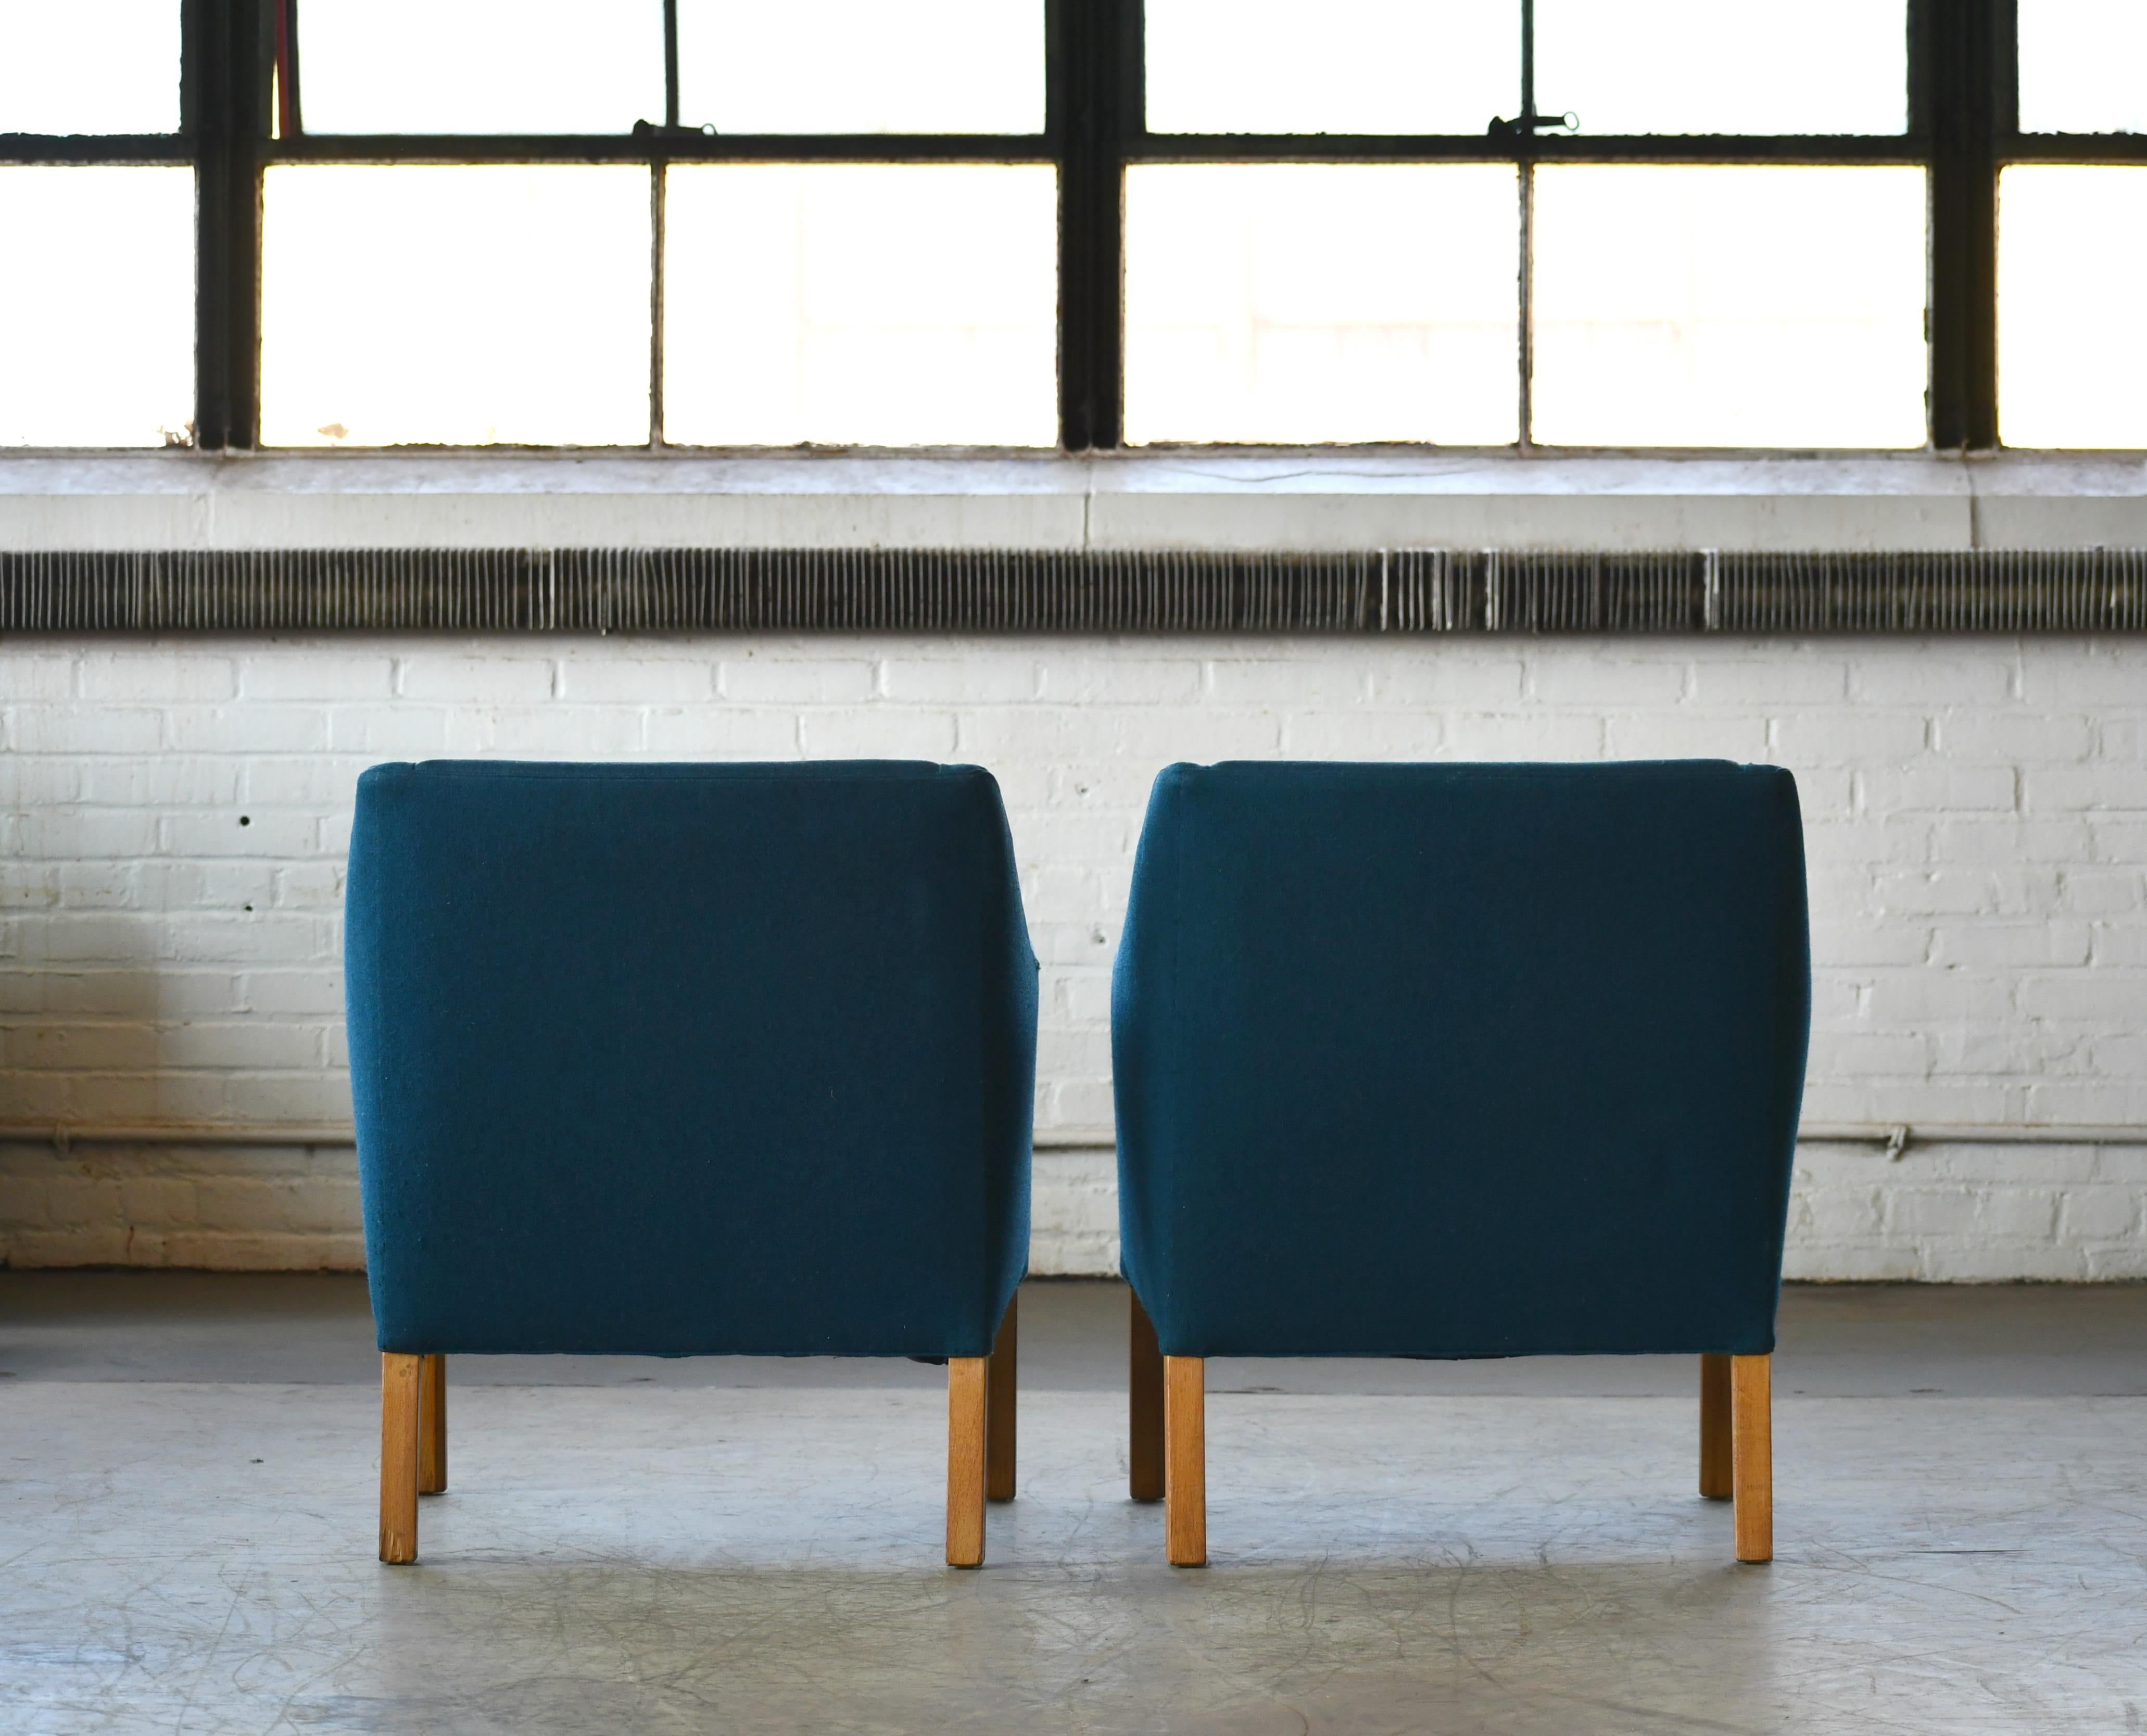 Pair of Danish Midcentury Lounge Chairs Attributed to Ejnar Larsen & Axel Bender 1